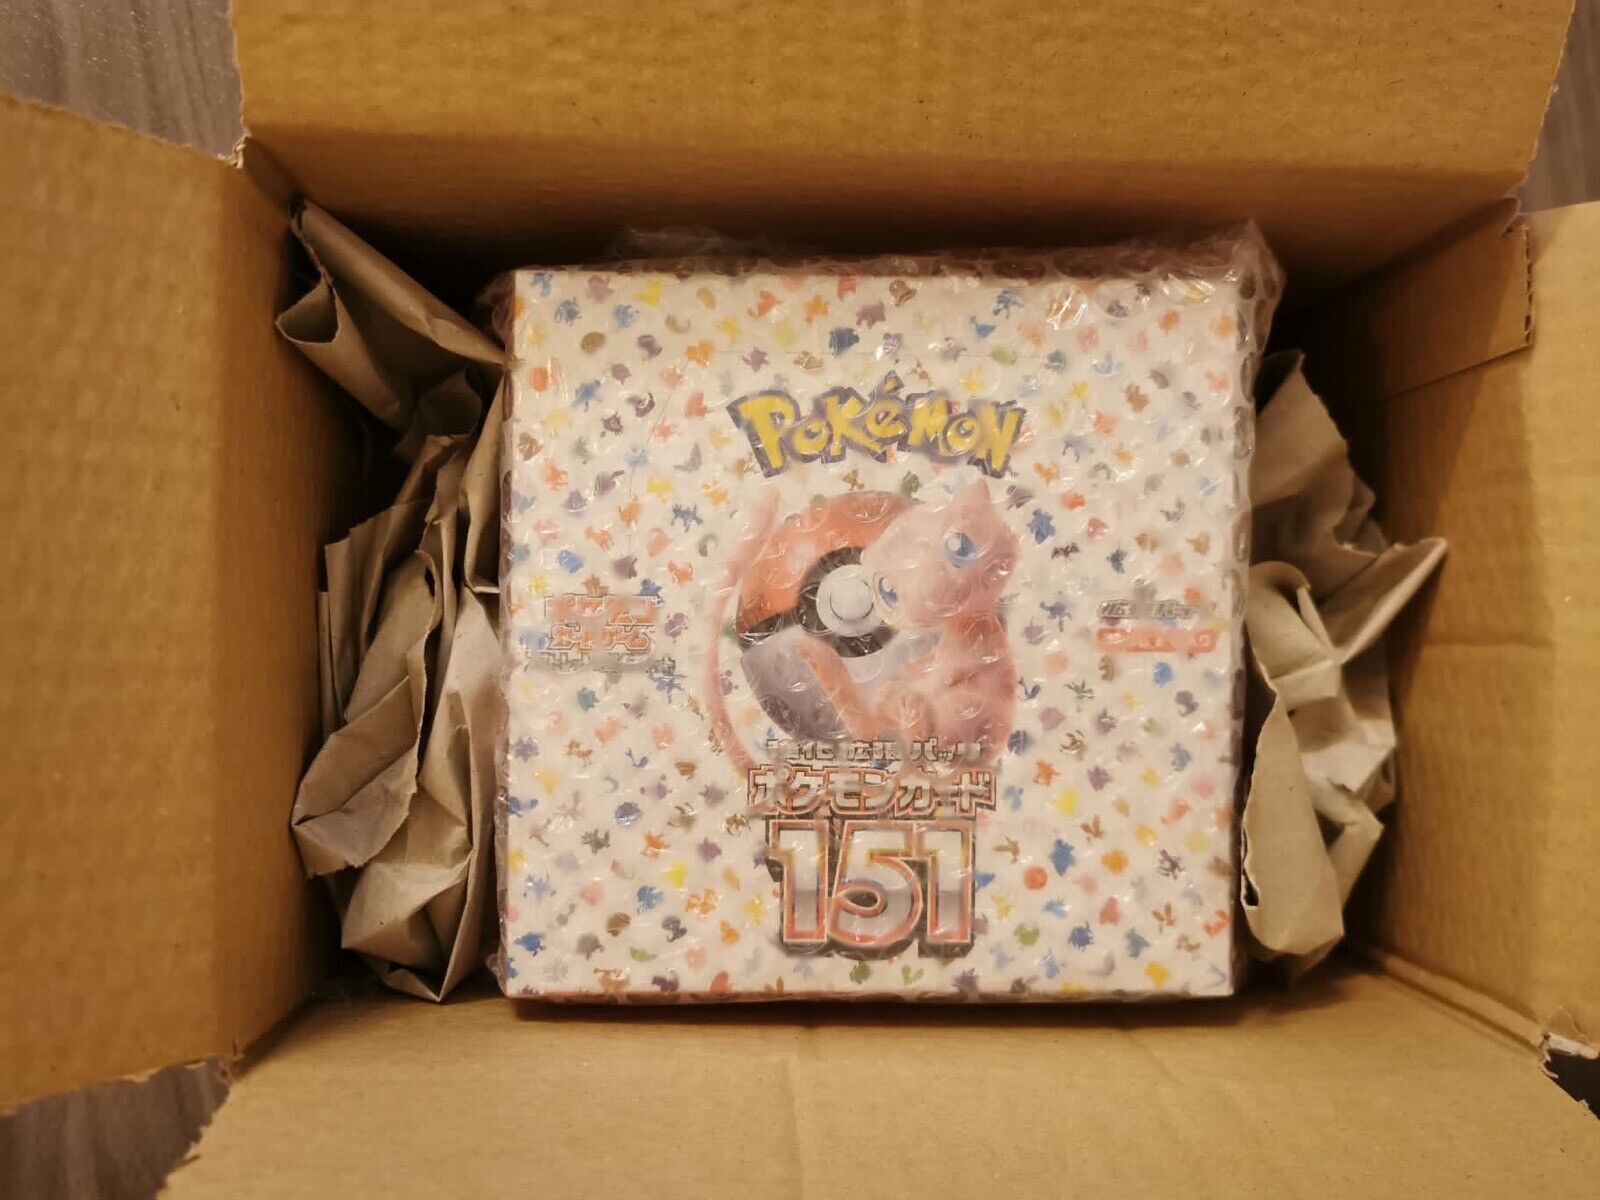 Pokémon TCG: 151 Japanese Pokemon Booster Box x1 - Ready To Ship Now #lot6